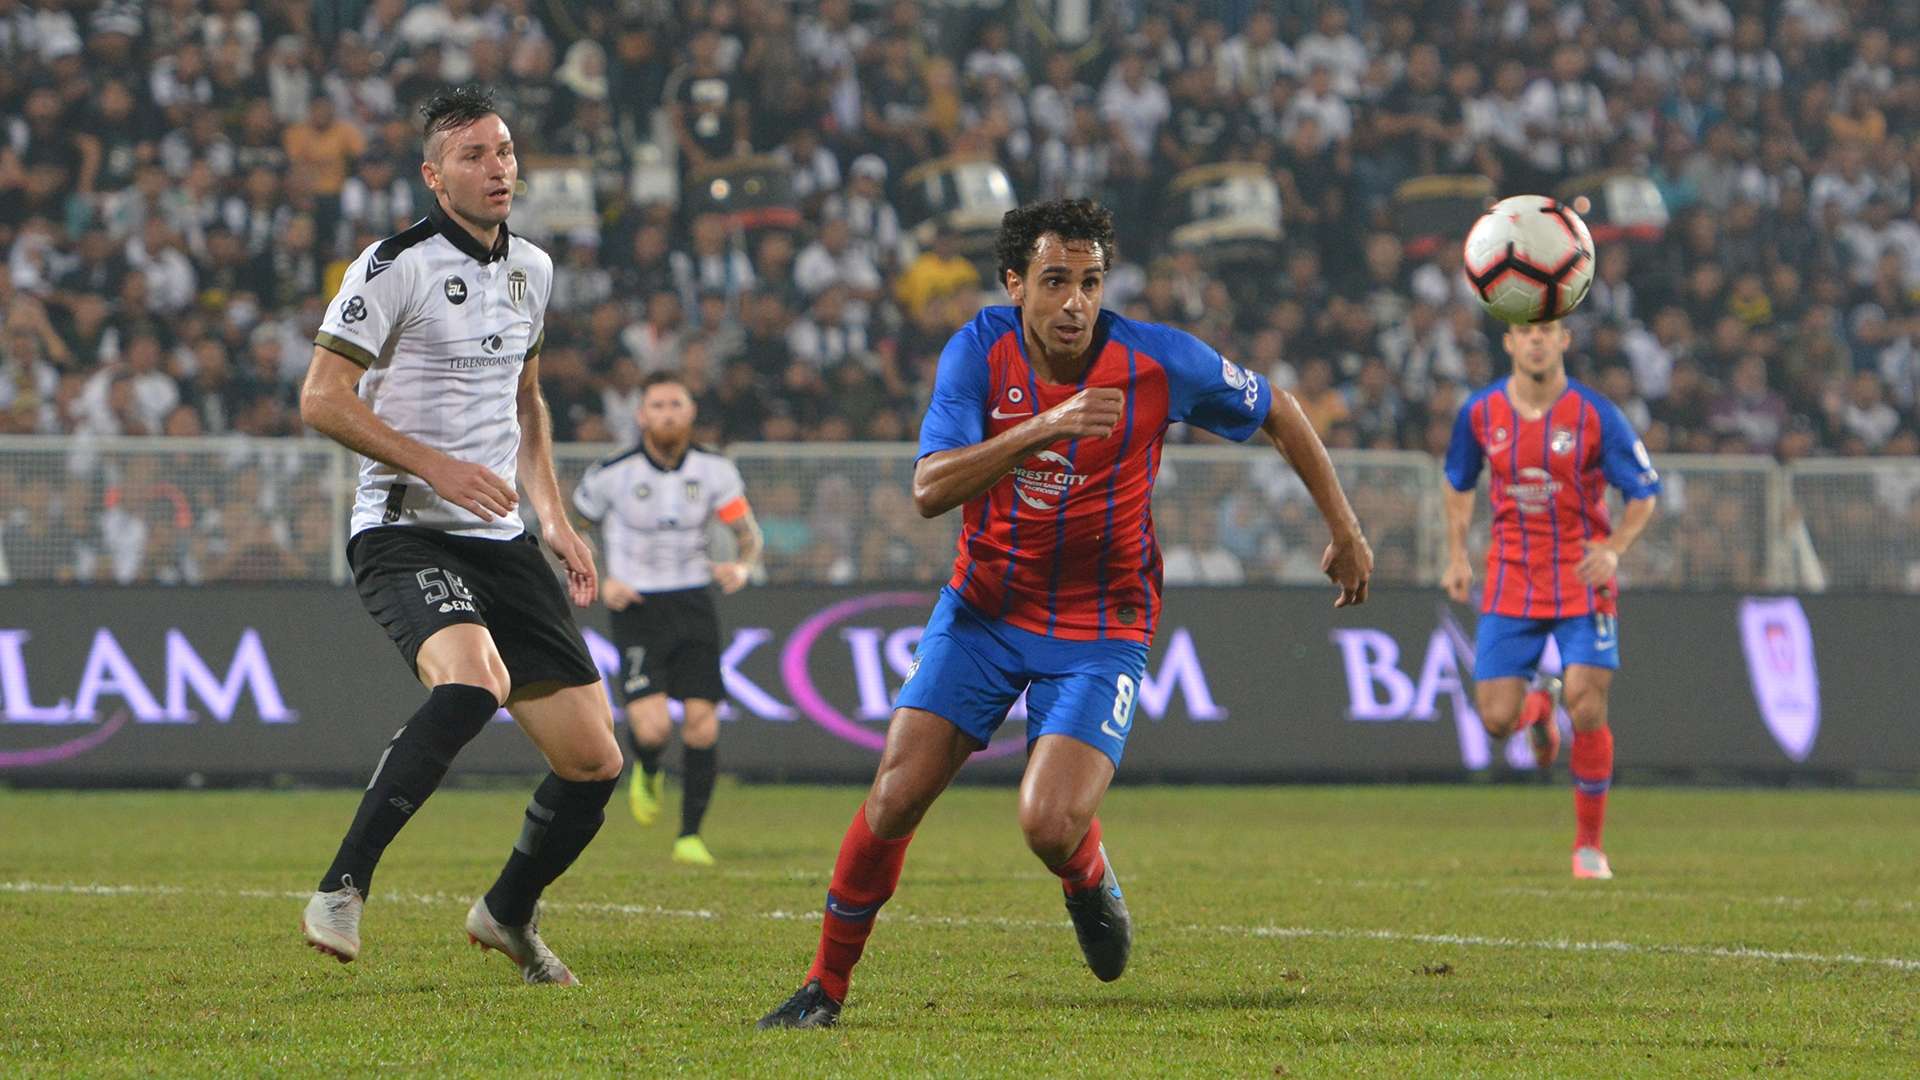 Diogo Luis Santo, Serhii Andrieiev, Terengganu FC v Johor Darul Ta'zim, Malaysia Cup, 21 Sep 2019